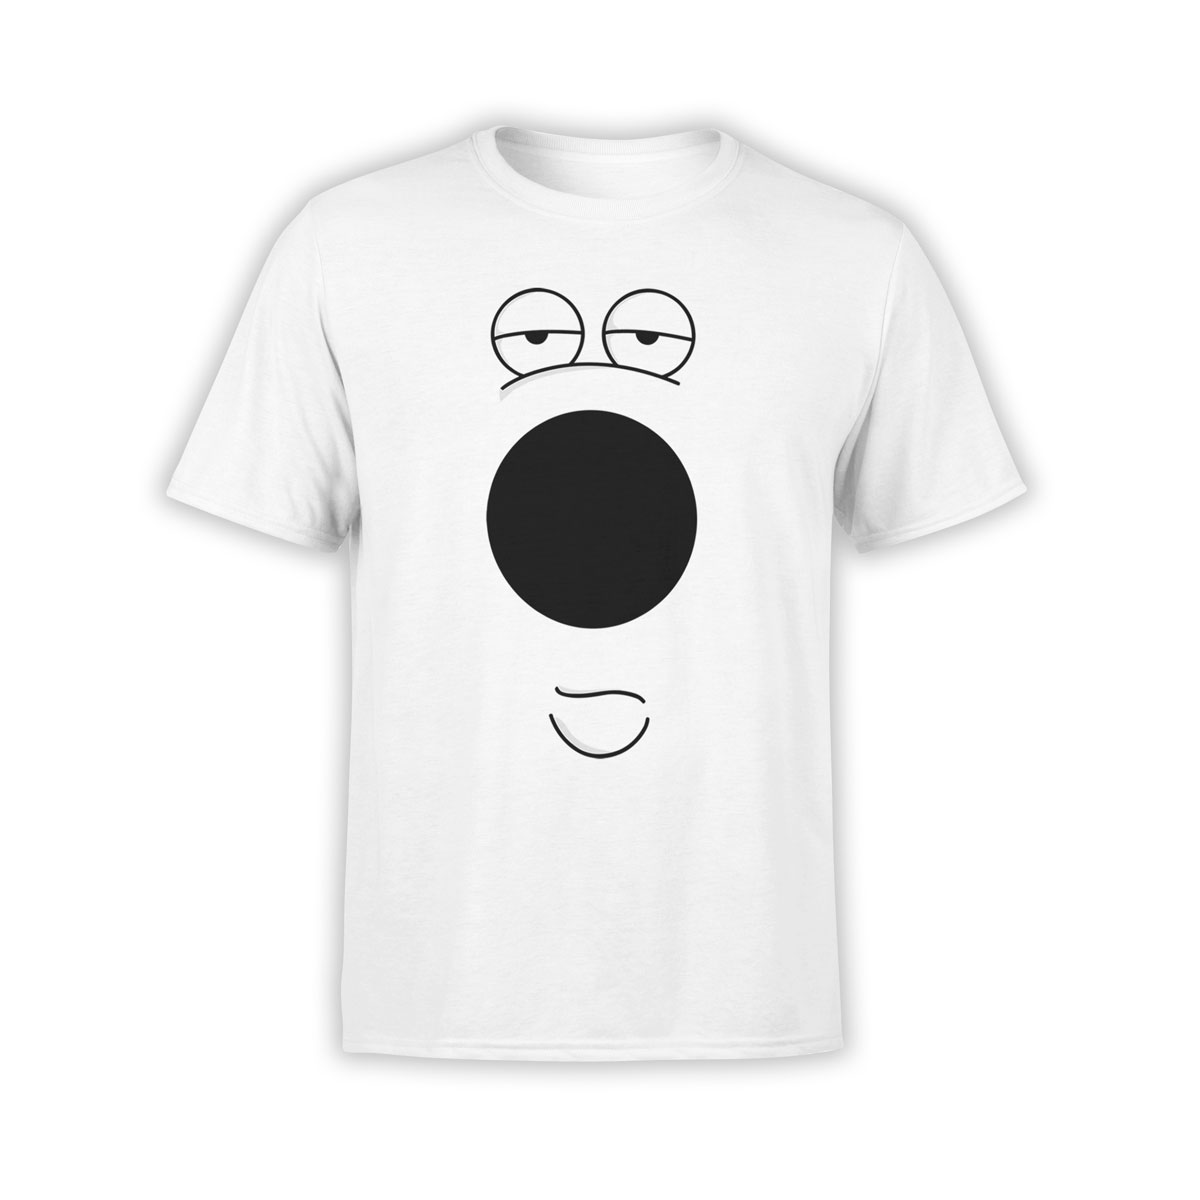 Eller enten Feed på Magtfulde Family Guy T-Shirts. "Brian Griffin" Unisex T-Shirt. 100% Ultra Cotton.